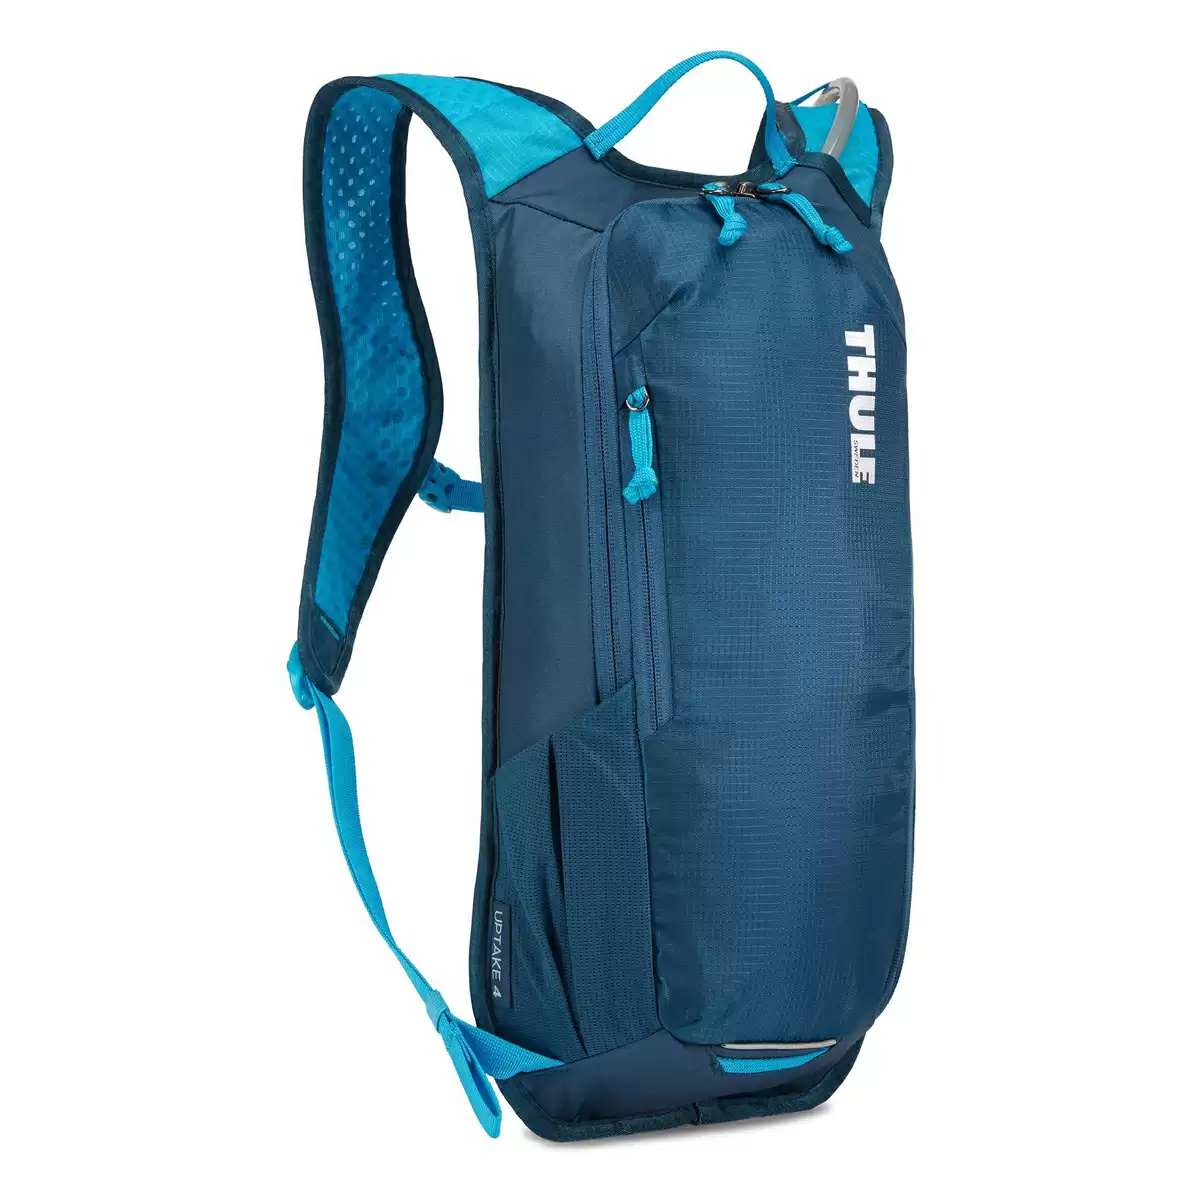 Water backpack UpTake 4L blue - image